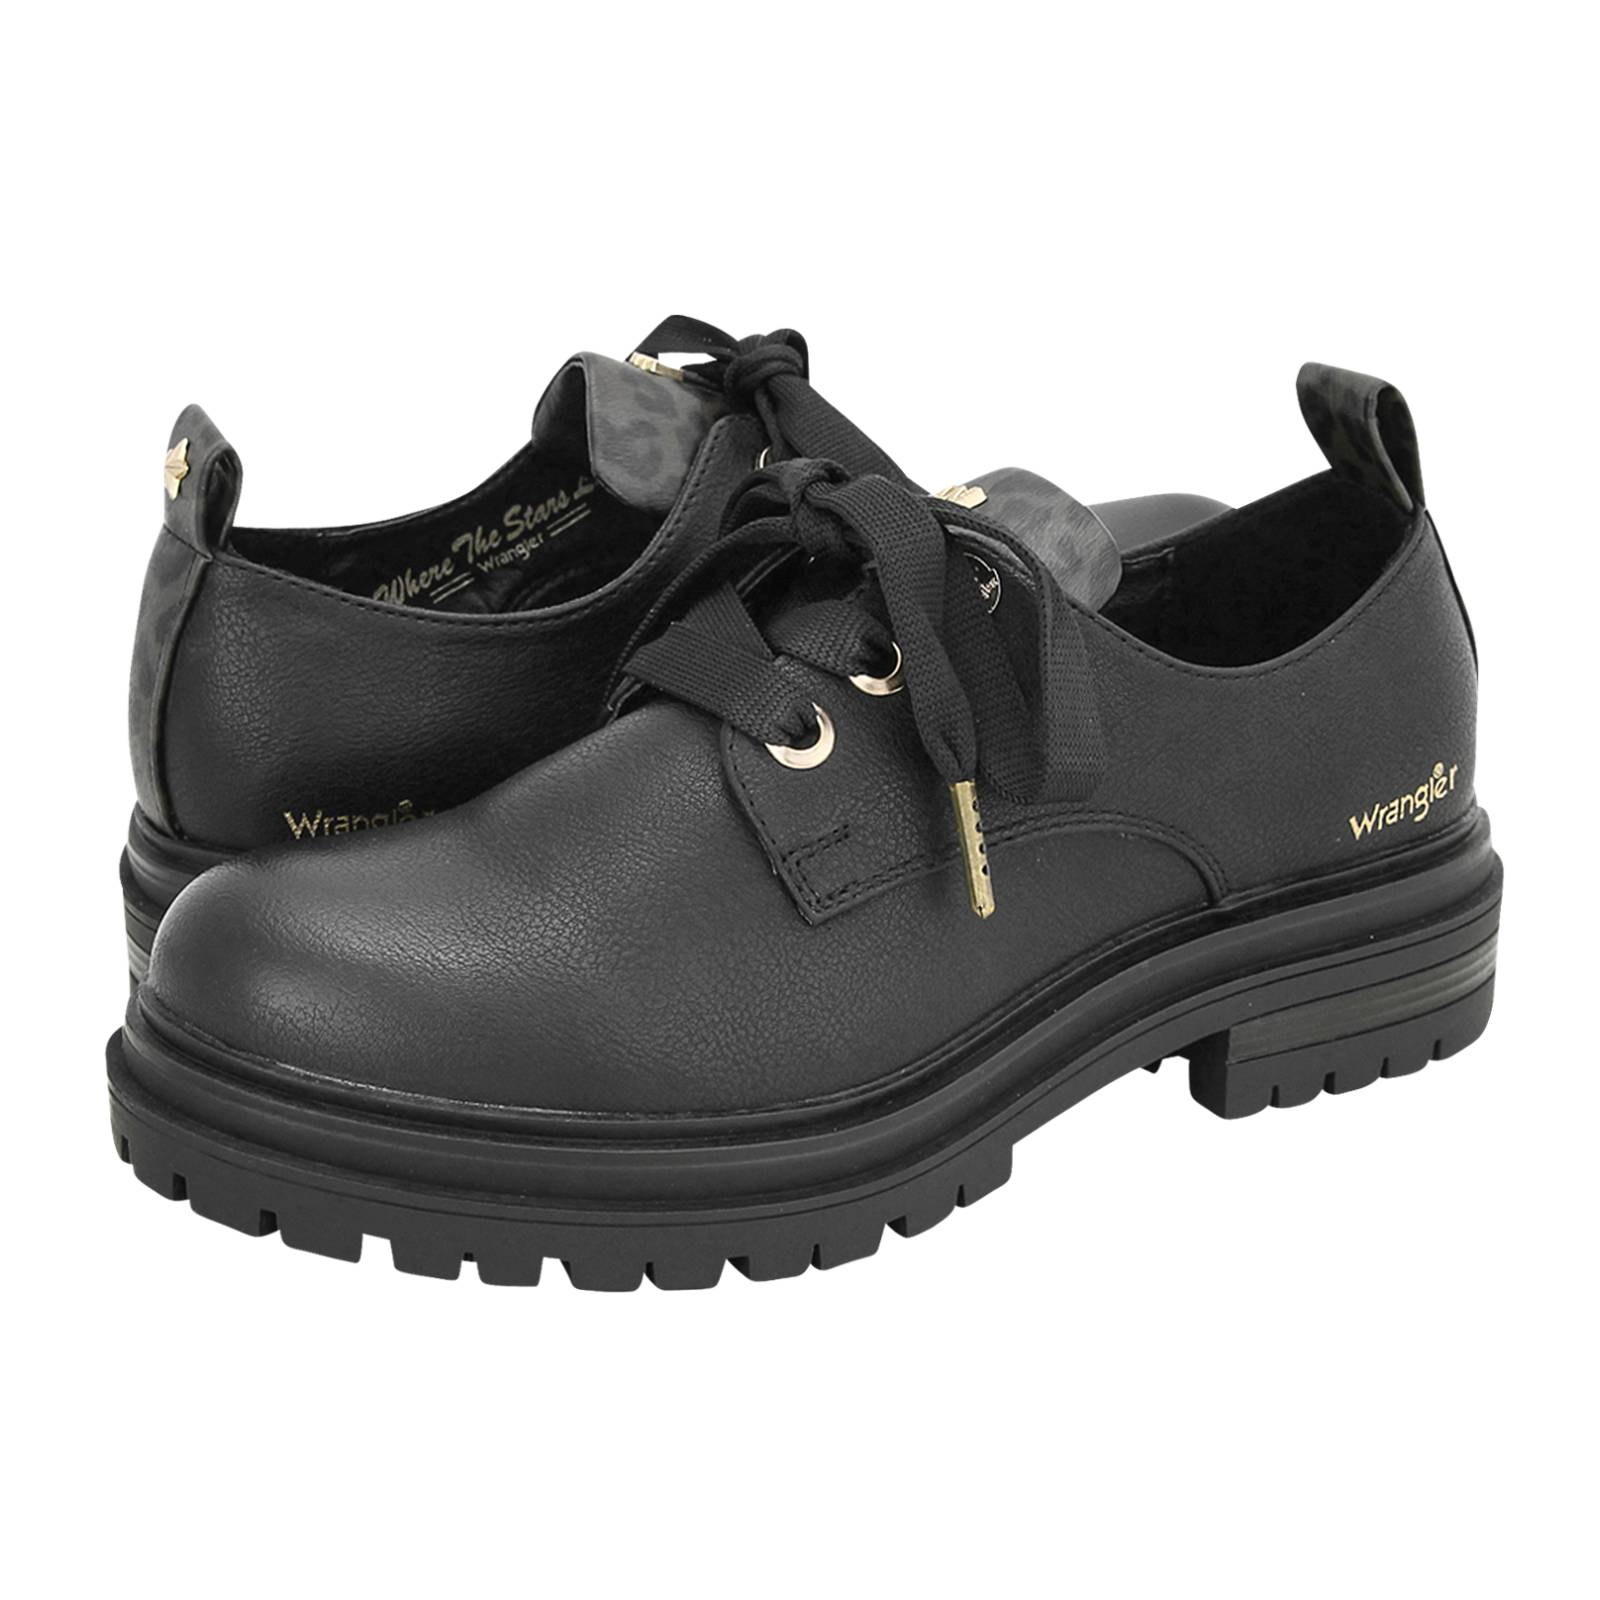 Courtney Safari Derby - Wrangler Women's Oxford shoes made of synthetic  leather - Gianna Kazakou Online